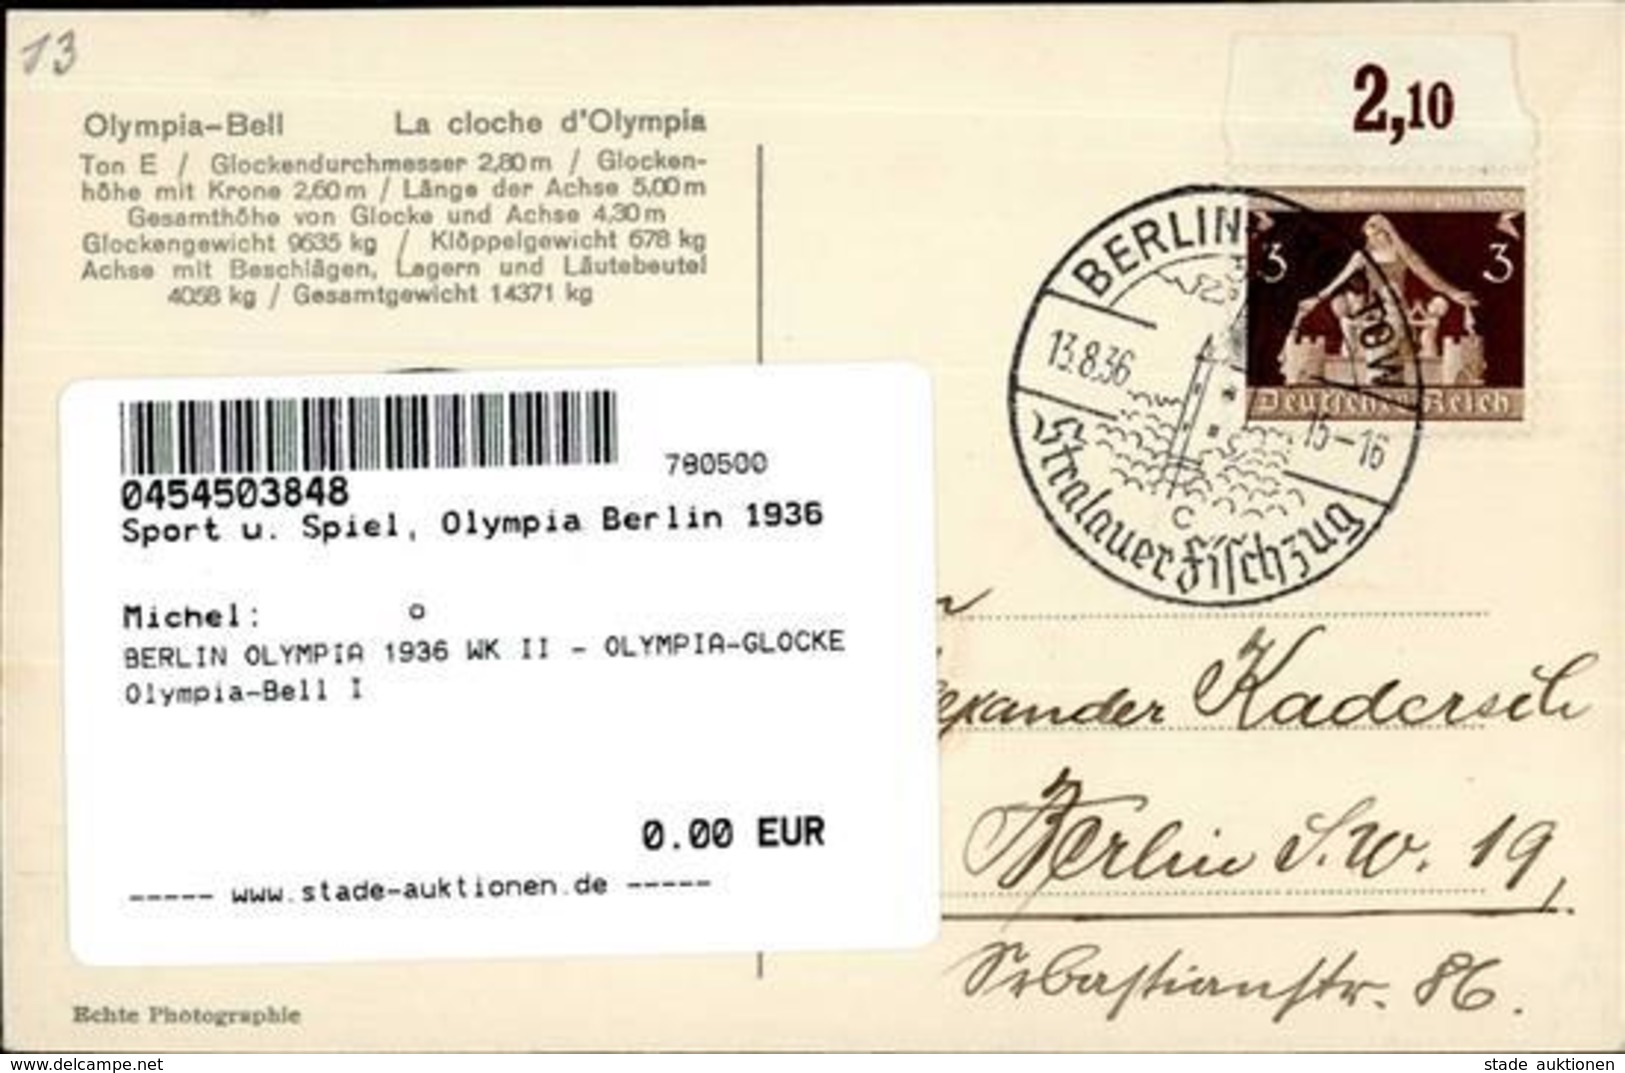 BERLIN OLYMPIA 1936 WK II - OLYMPIA-GLOCKE Olympia-Bell I - Giochi Olimpici